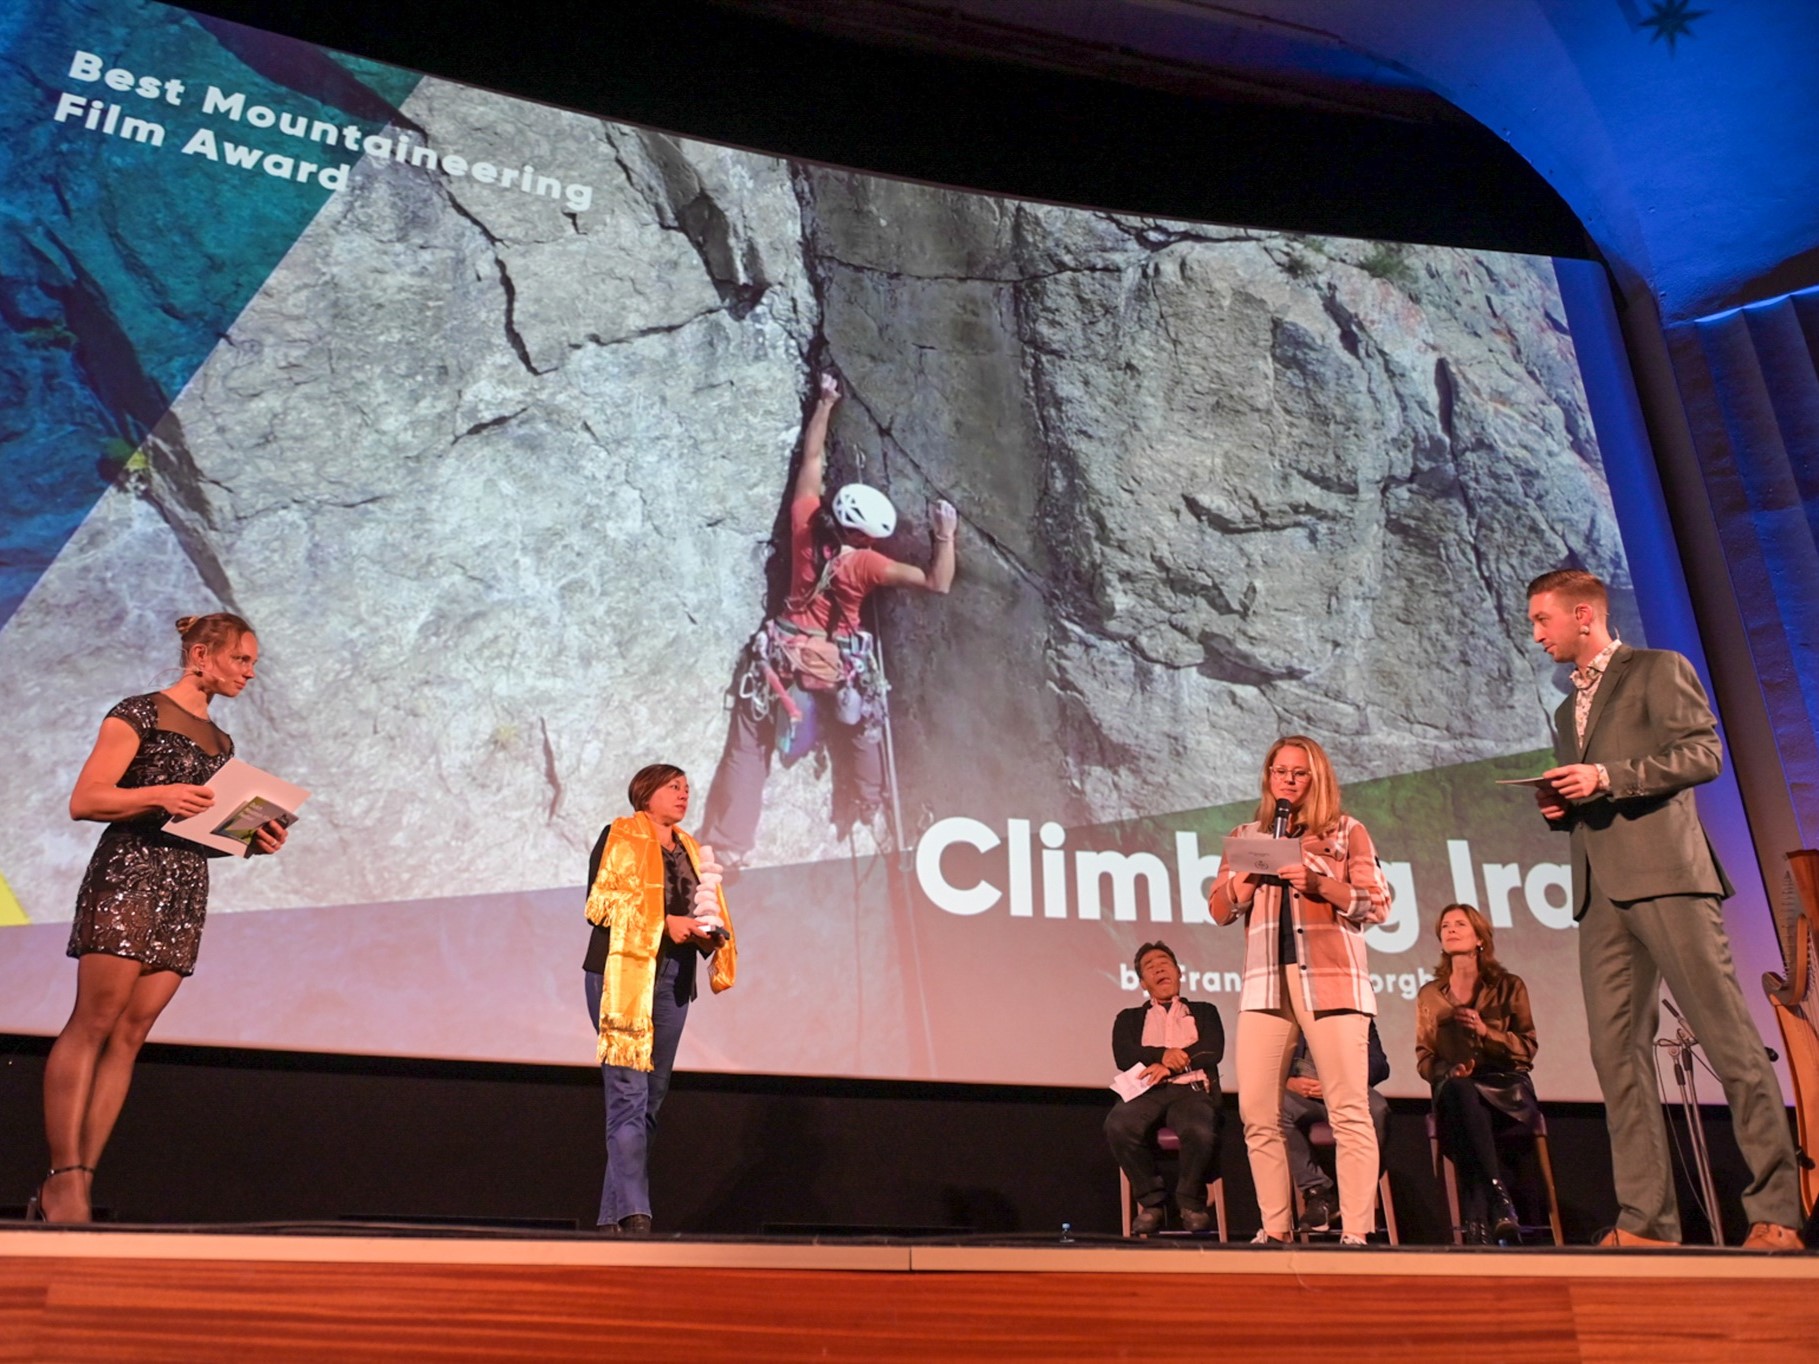 Climbing Iran Francesca Borghetti wins DMFF Best Mountaineering Film Award 2022 in Heerlen